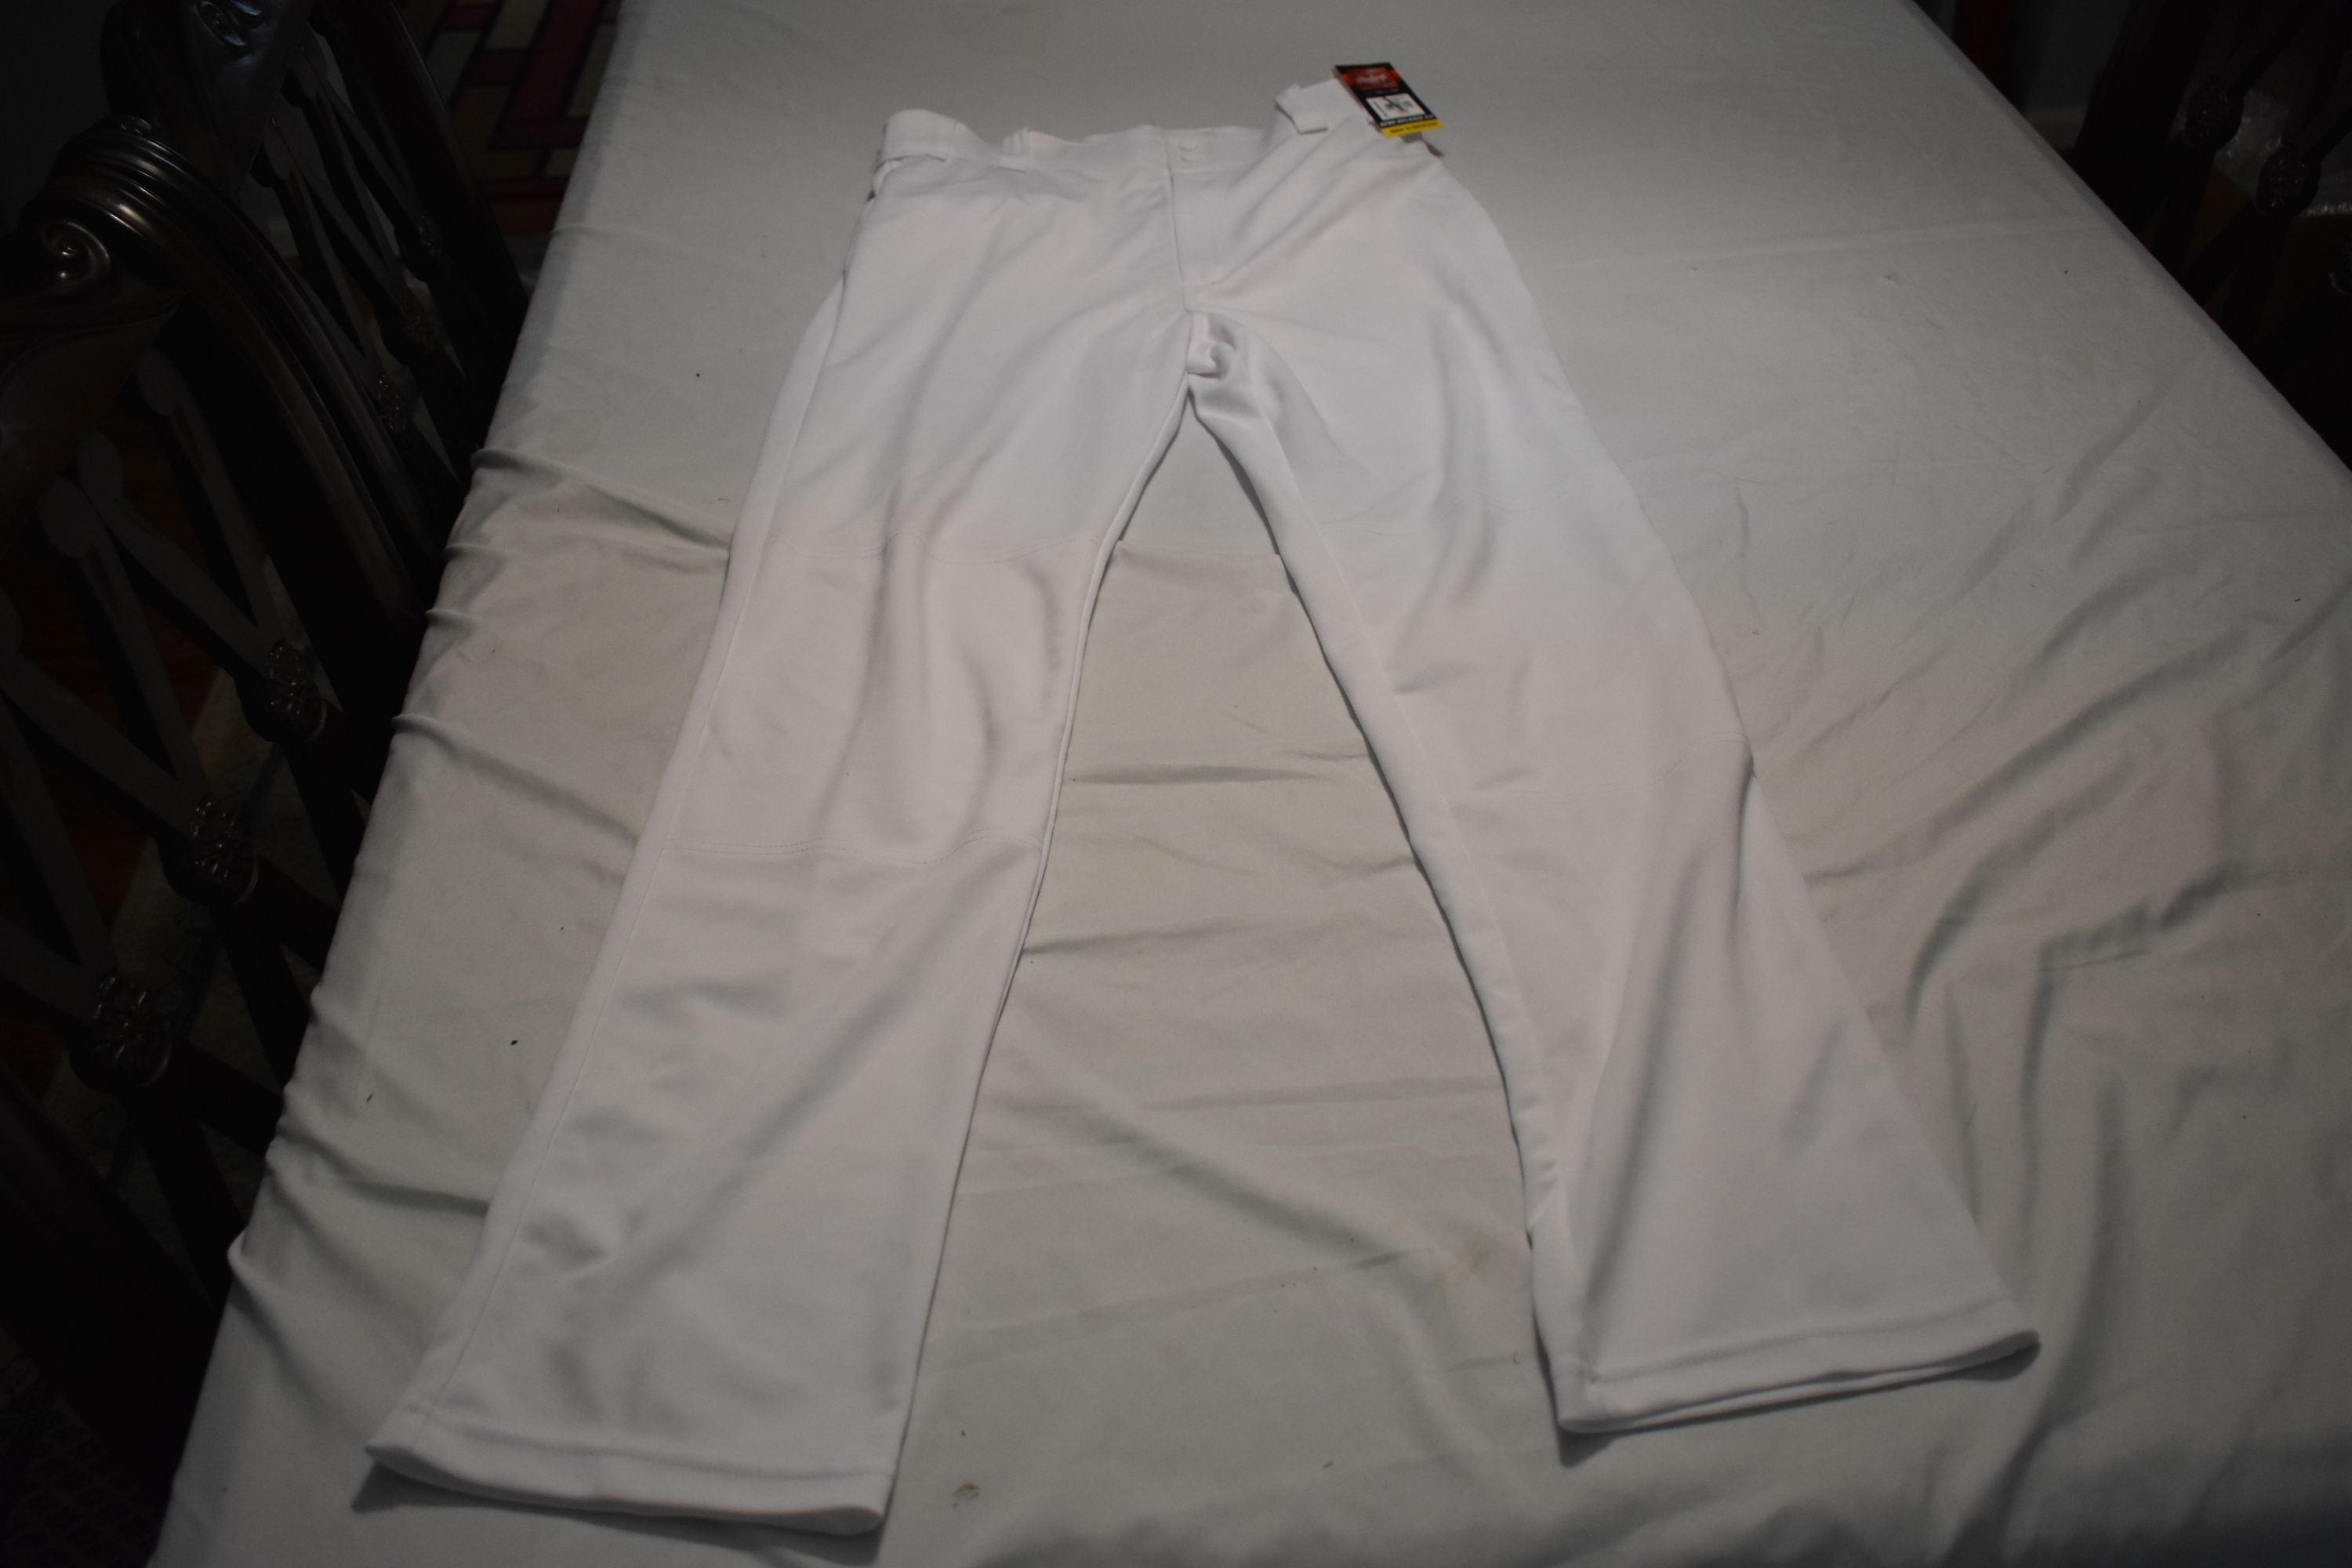 NEW - Rawlings Baseball Pants, White, Adult Medium